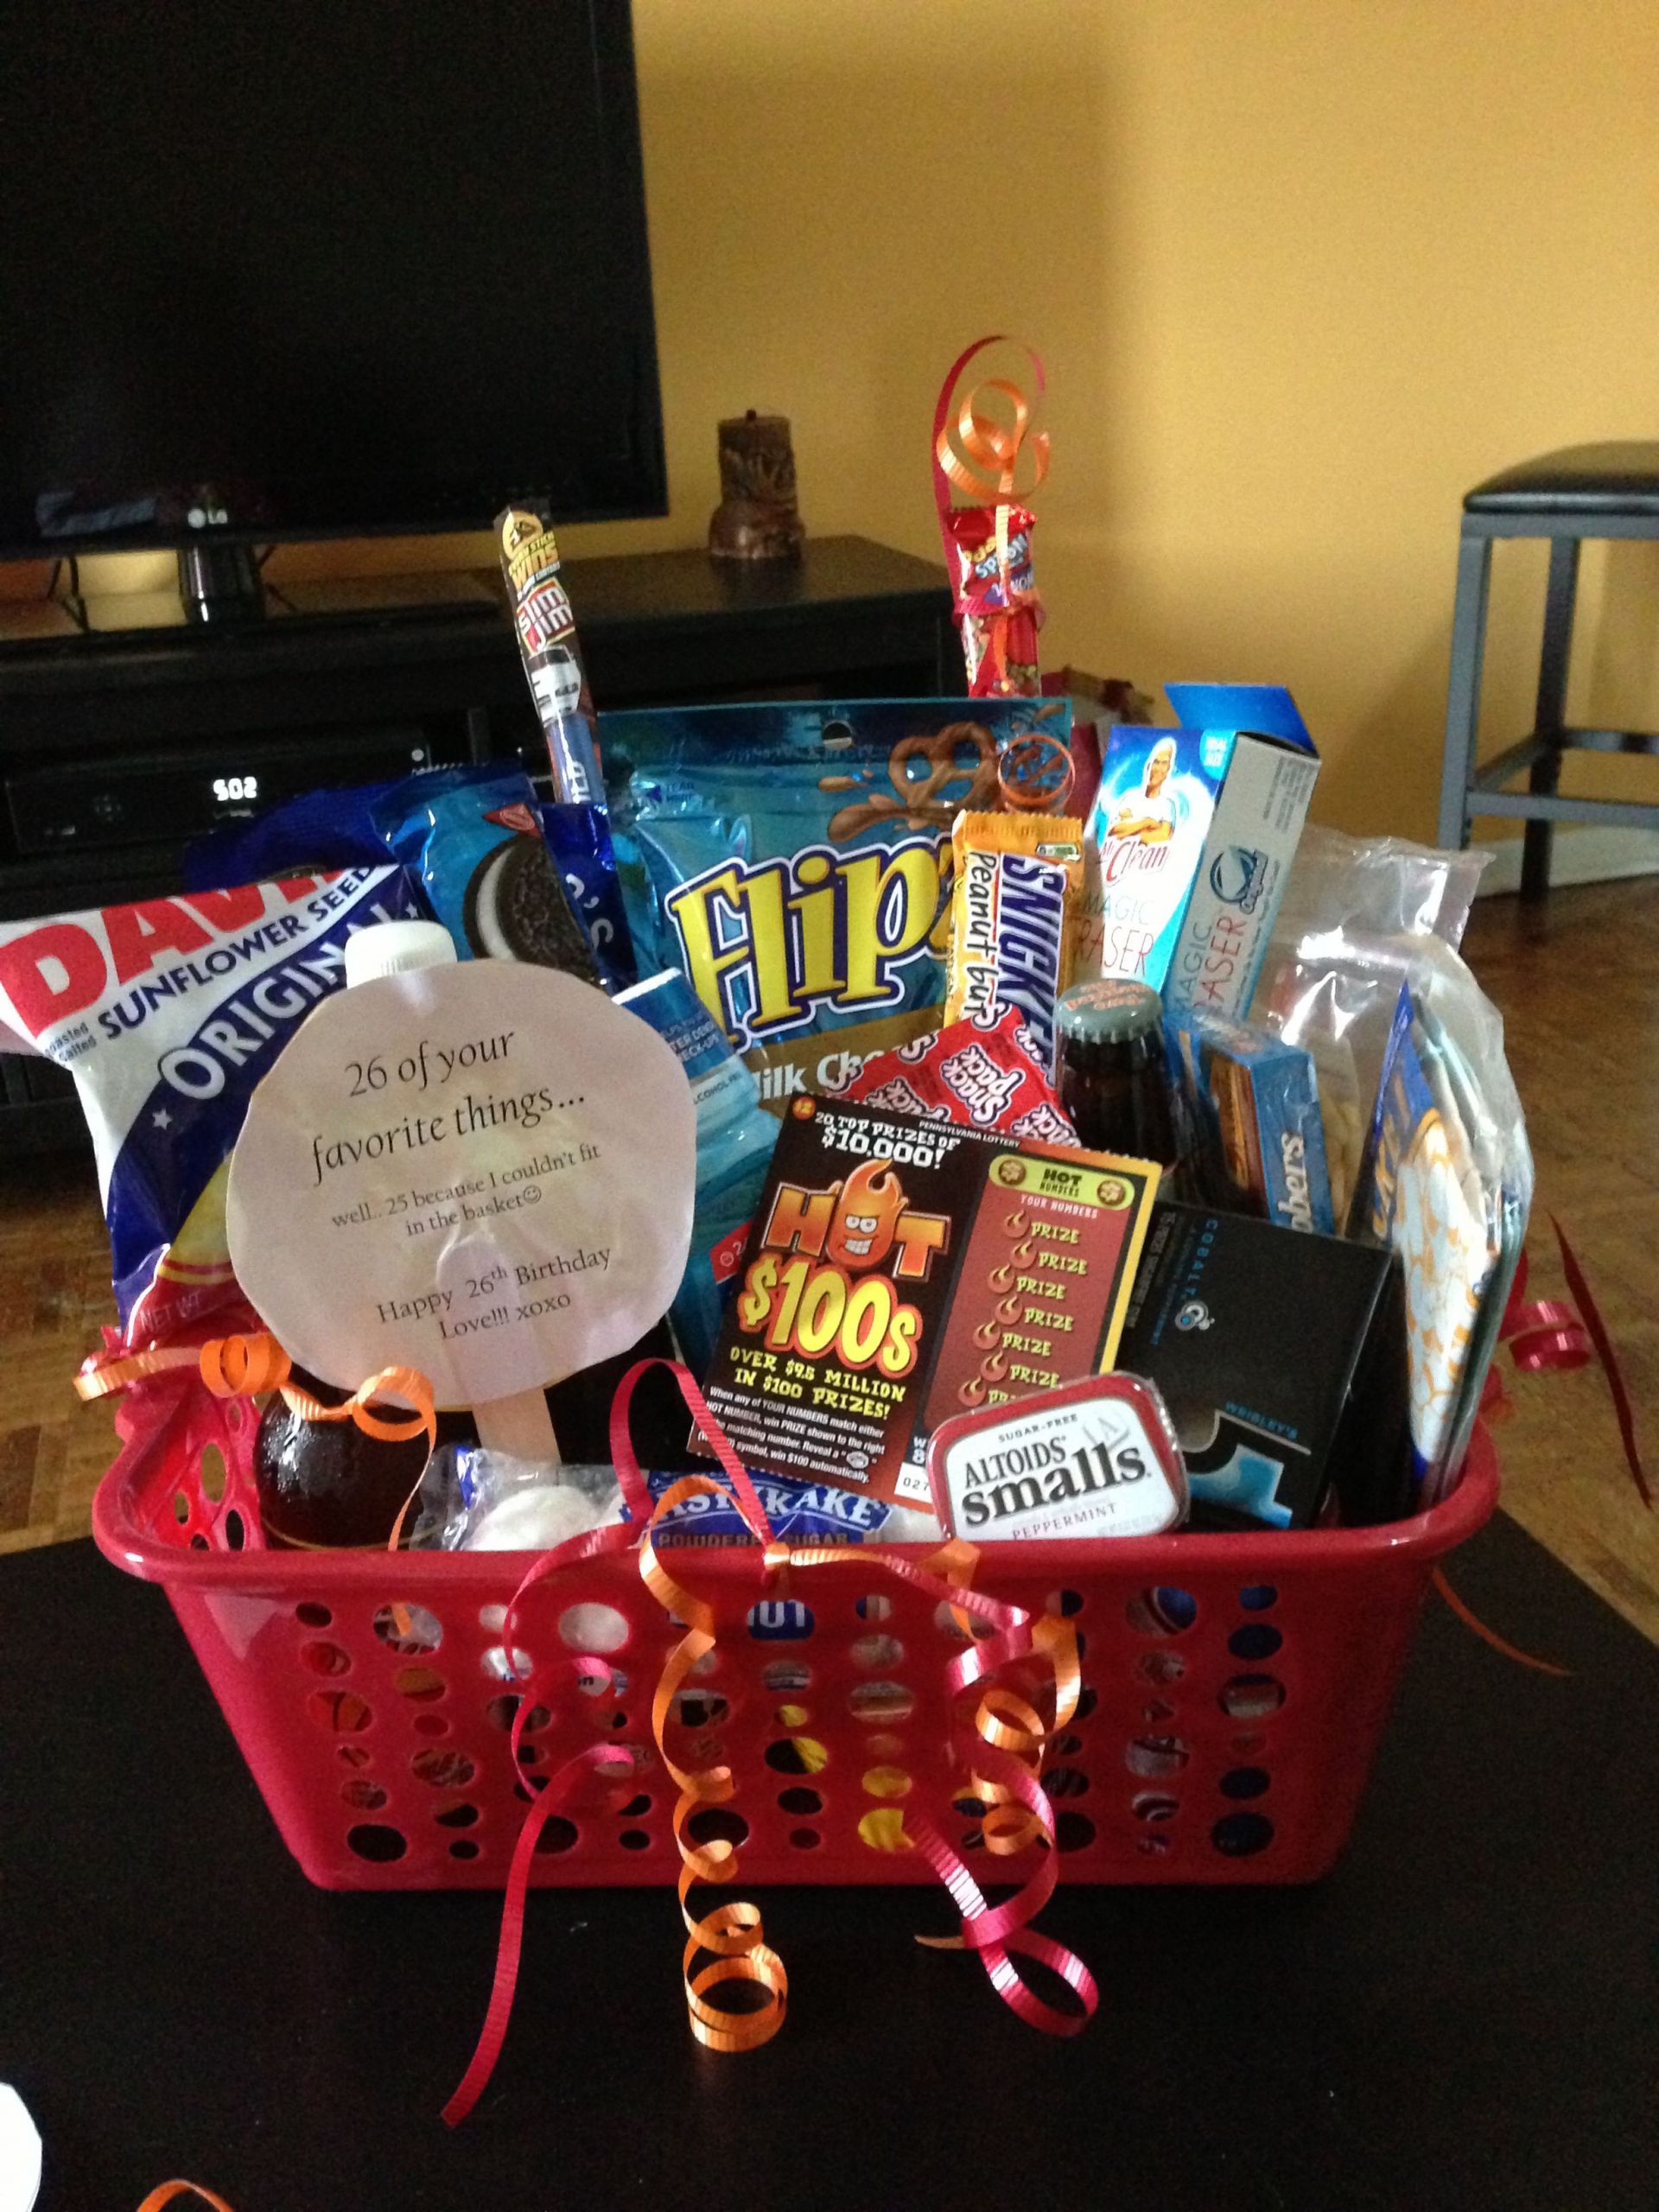 Creative Birthday Gift Ideas For Boyfriend
 Boyfriend birthday basket 26 of his favorite things for